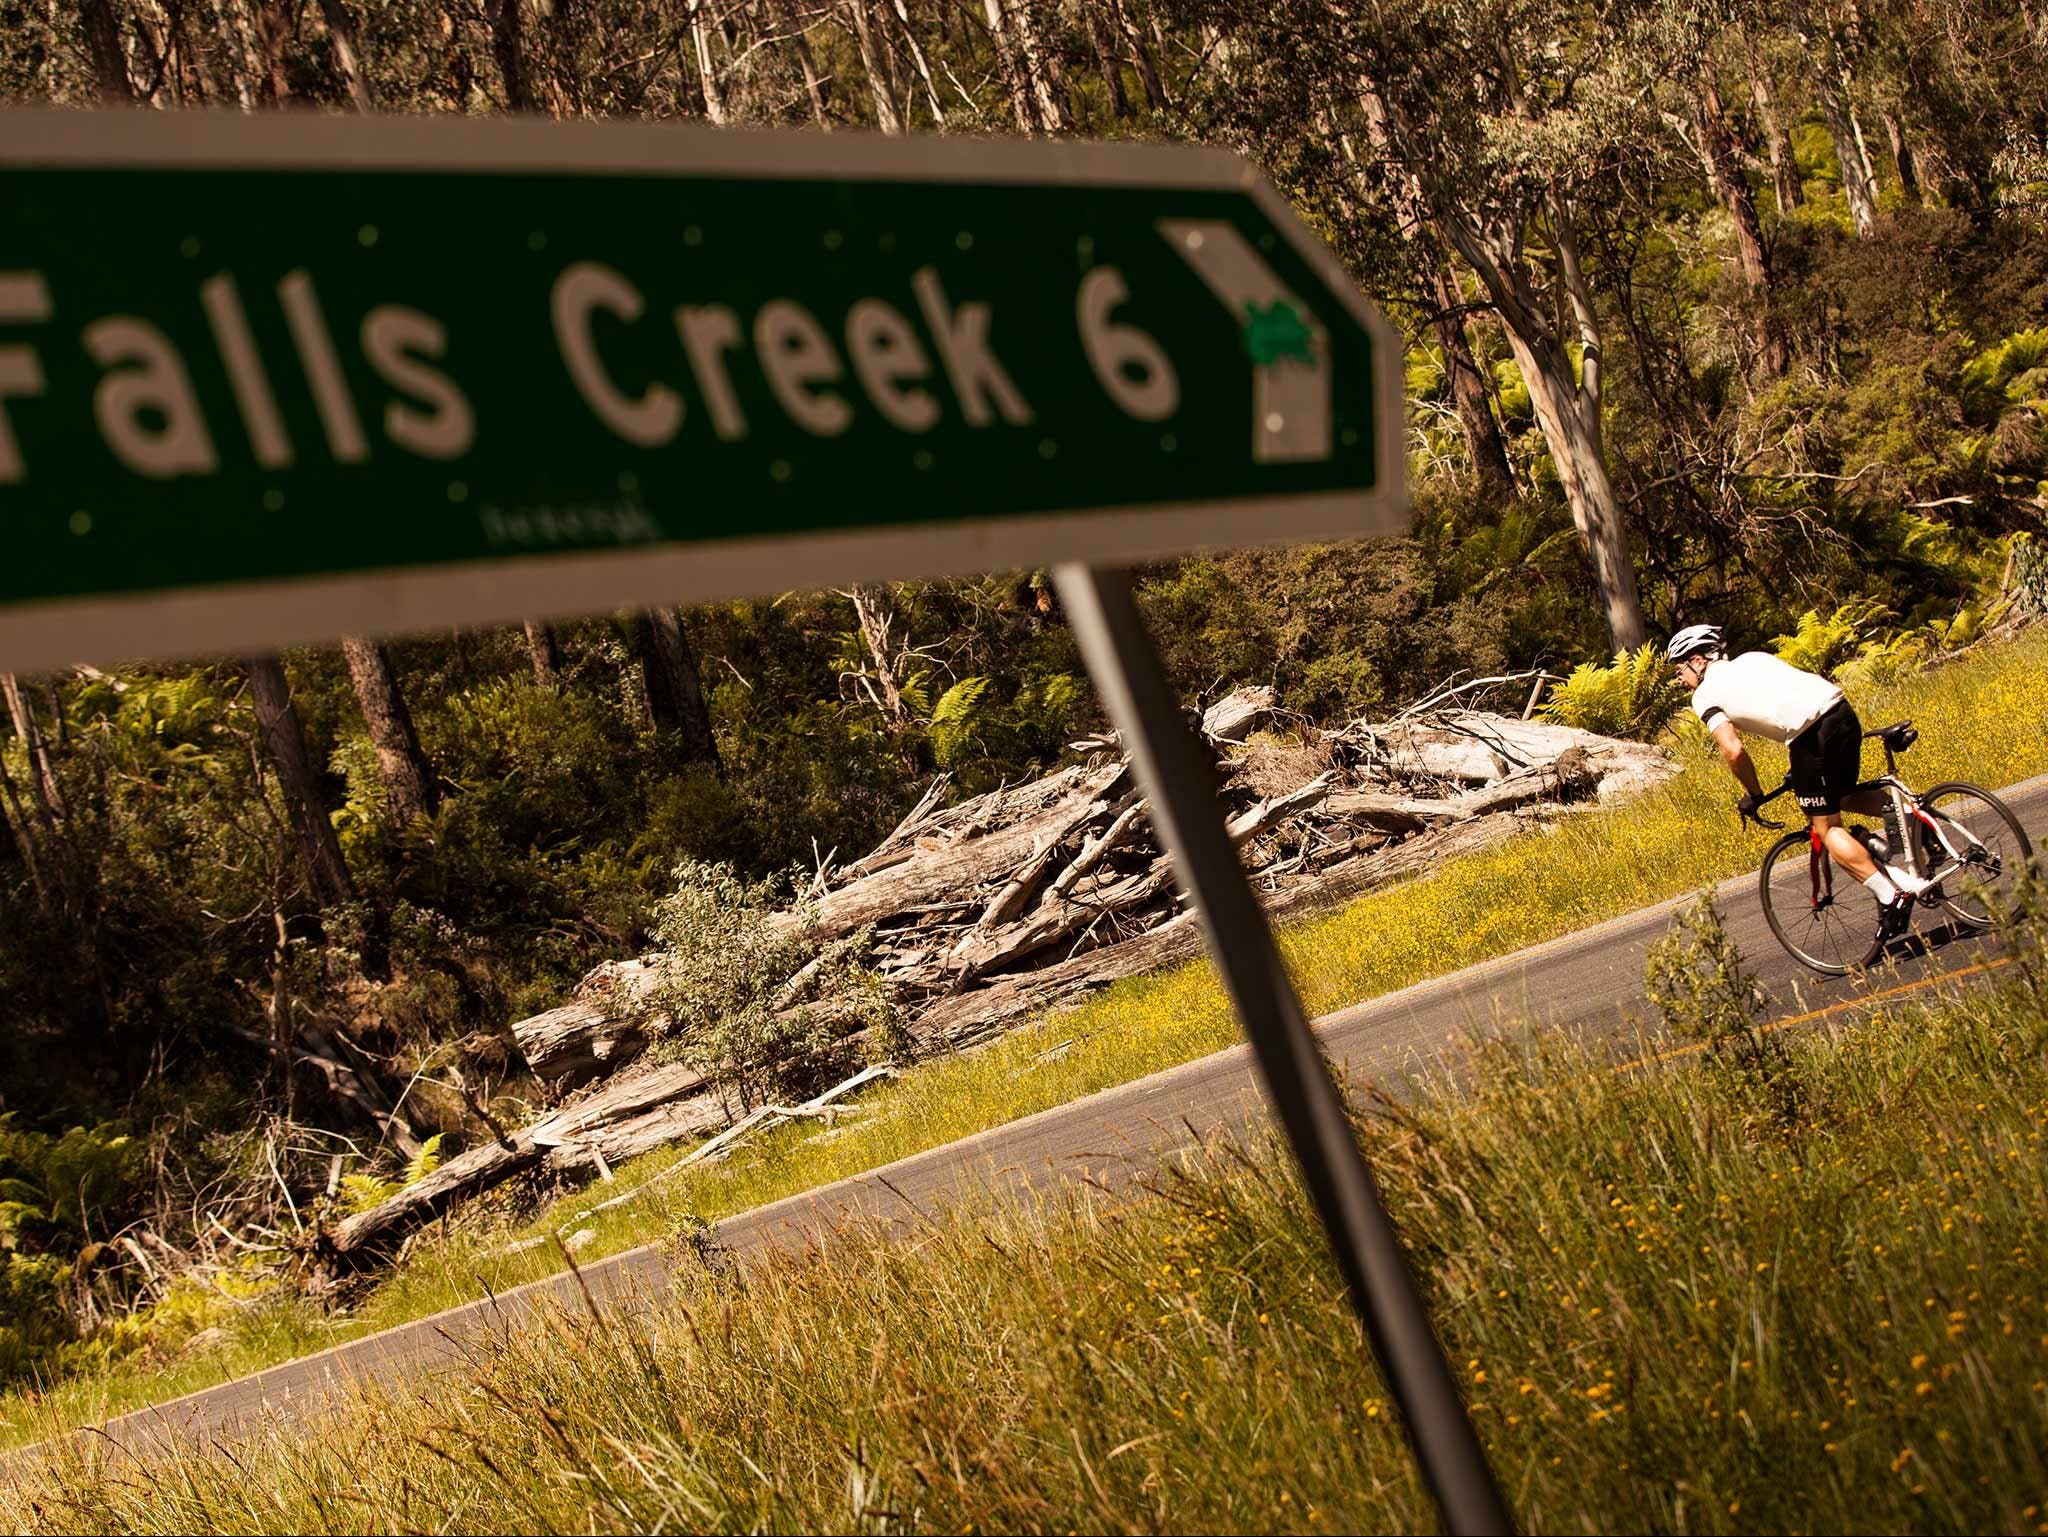 7 Peaks Ride - Falls Creek - Tourism Adelaide